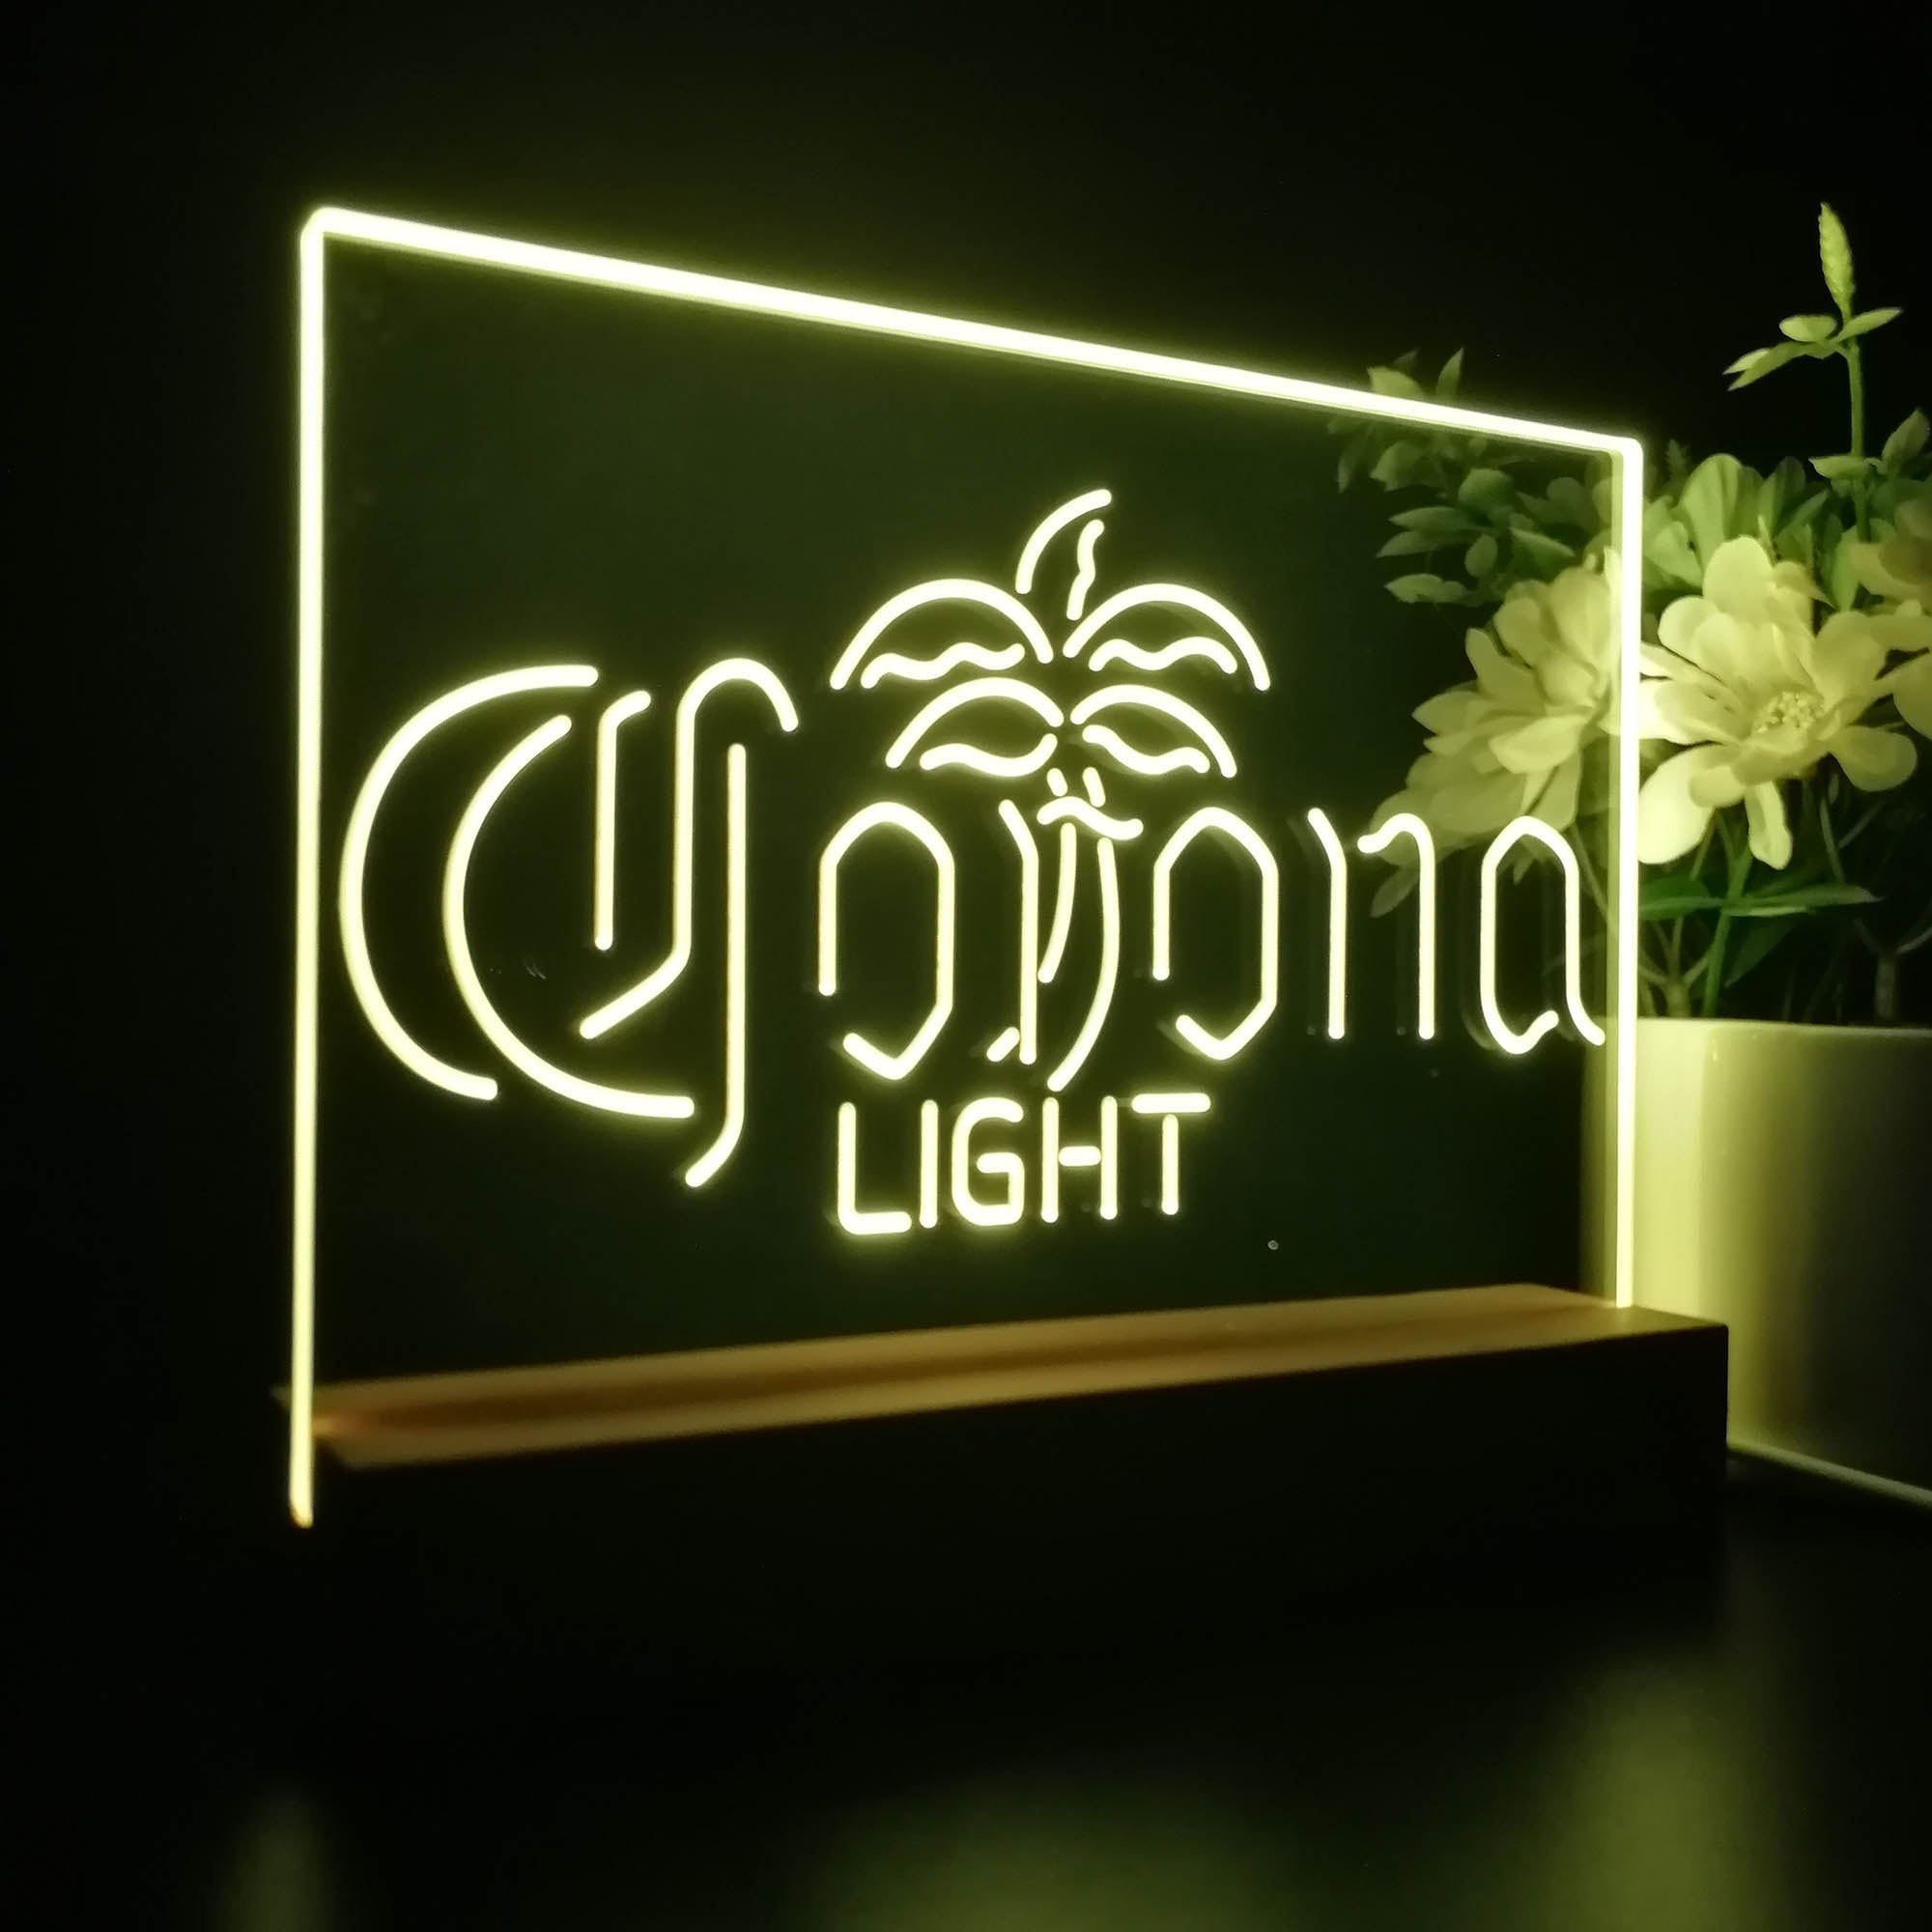 Coronas Light Palm Tree Middle Neon Sign Pub Bar Lamp